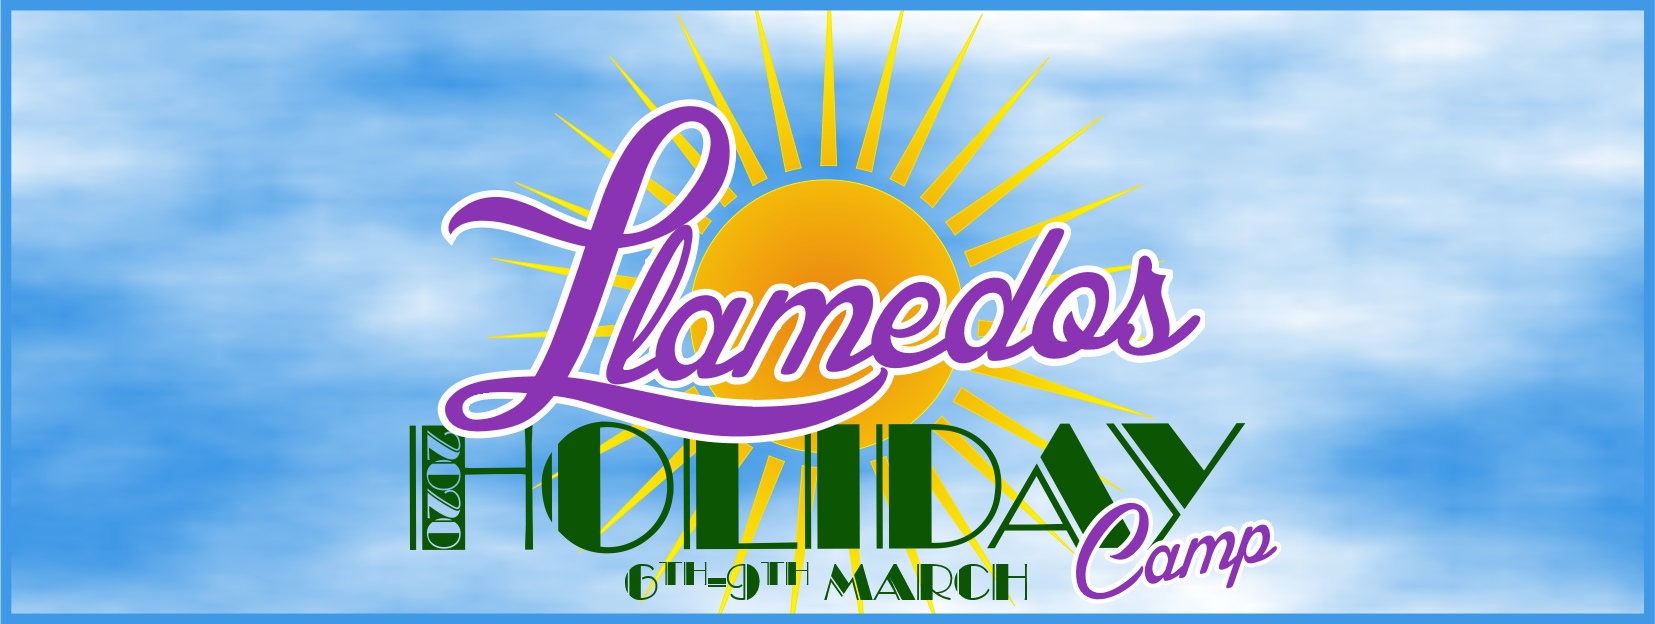 Llamedos Holiday Camp 6th March-8th March 2020